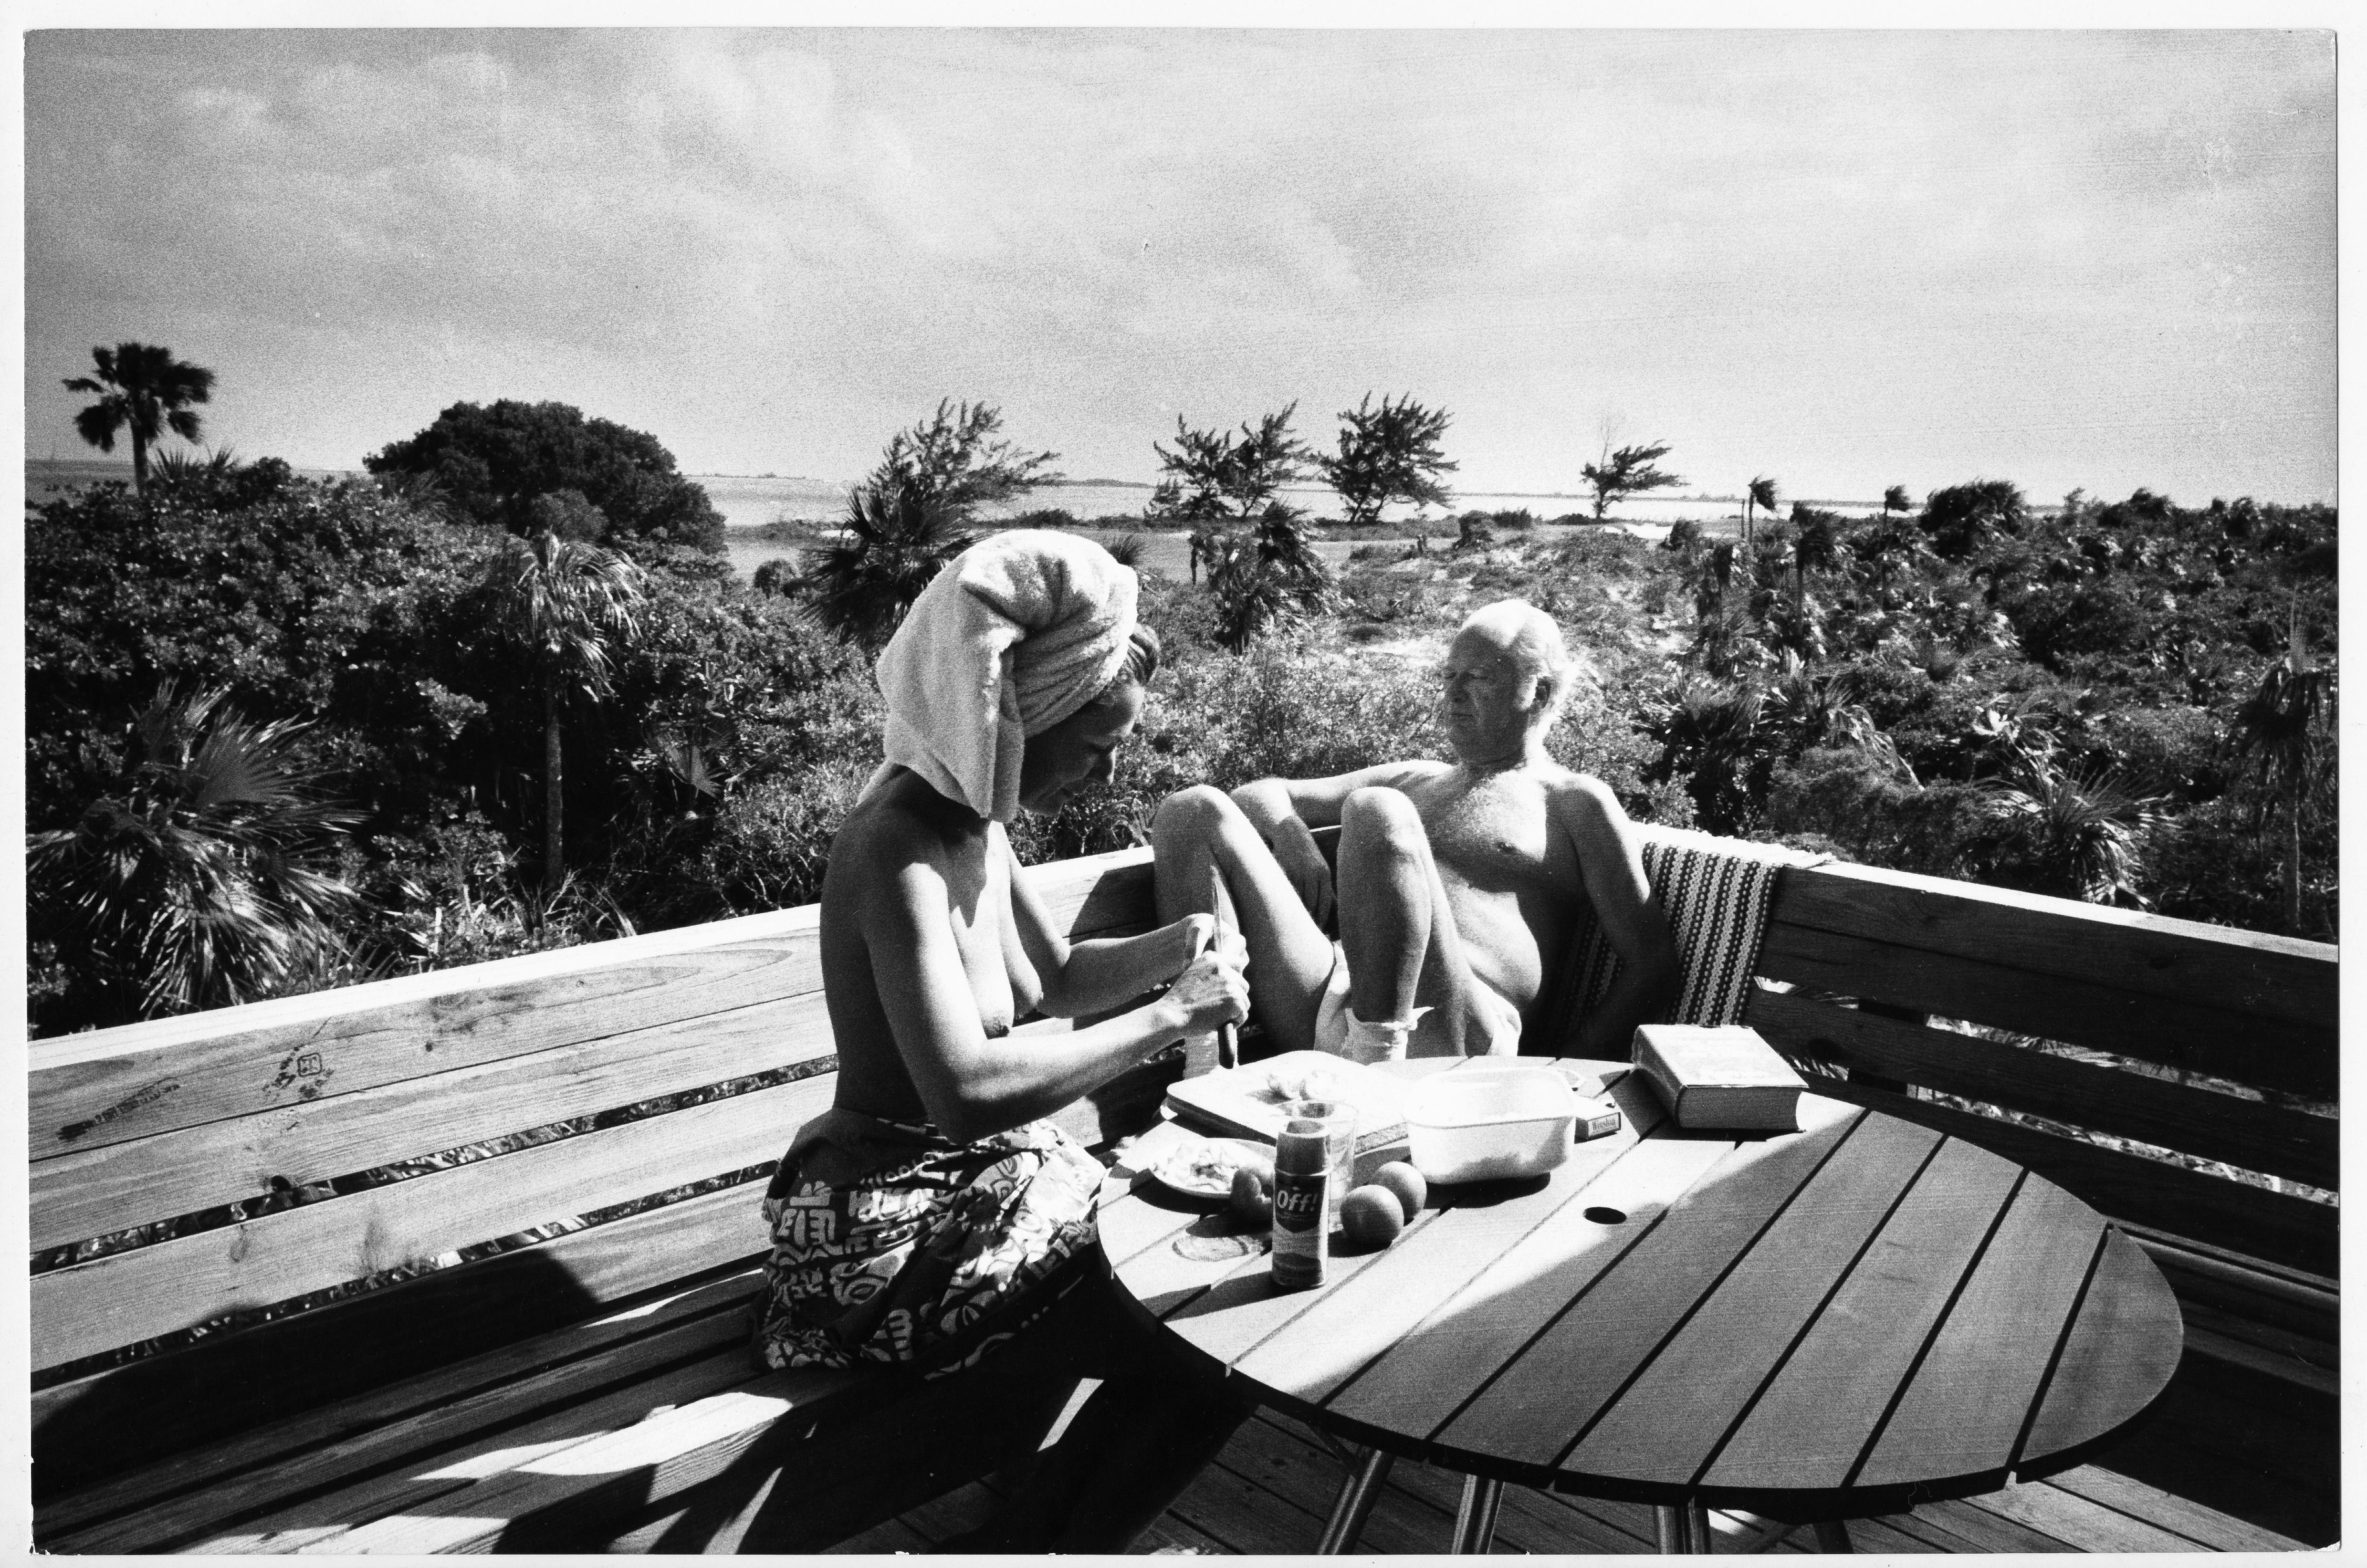 Emil Perauer Black and White Photograph - Bahamas-Curd Jürgens and Wife Simone (Bicheron) topless on a terrace, circa 1971